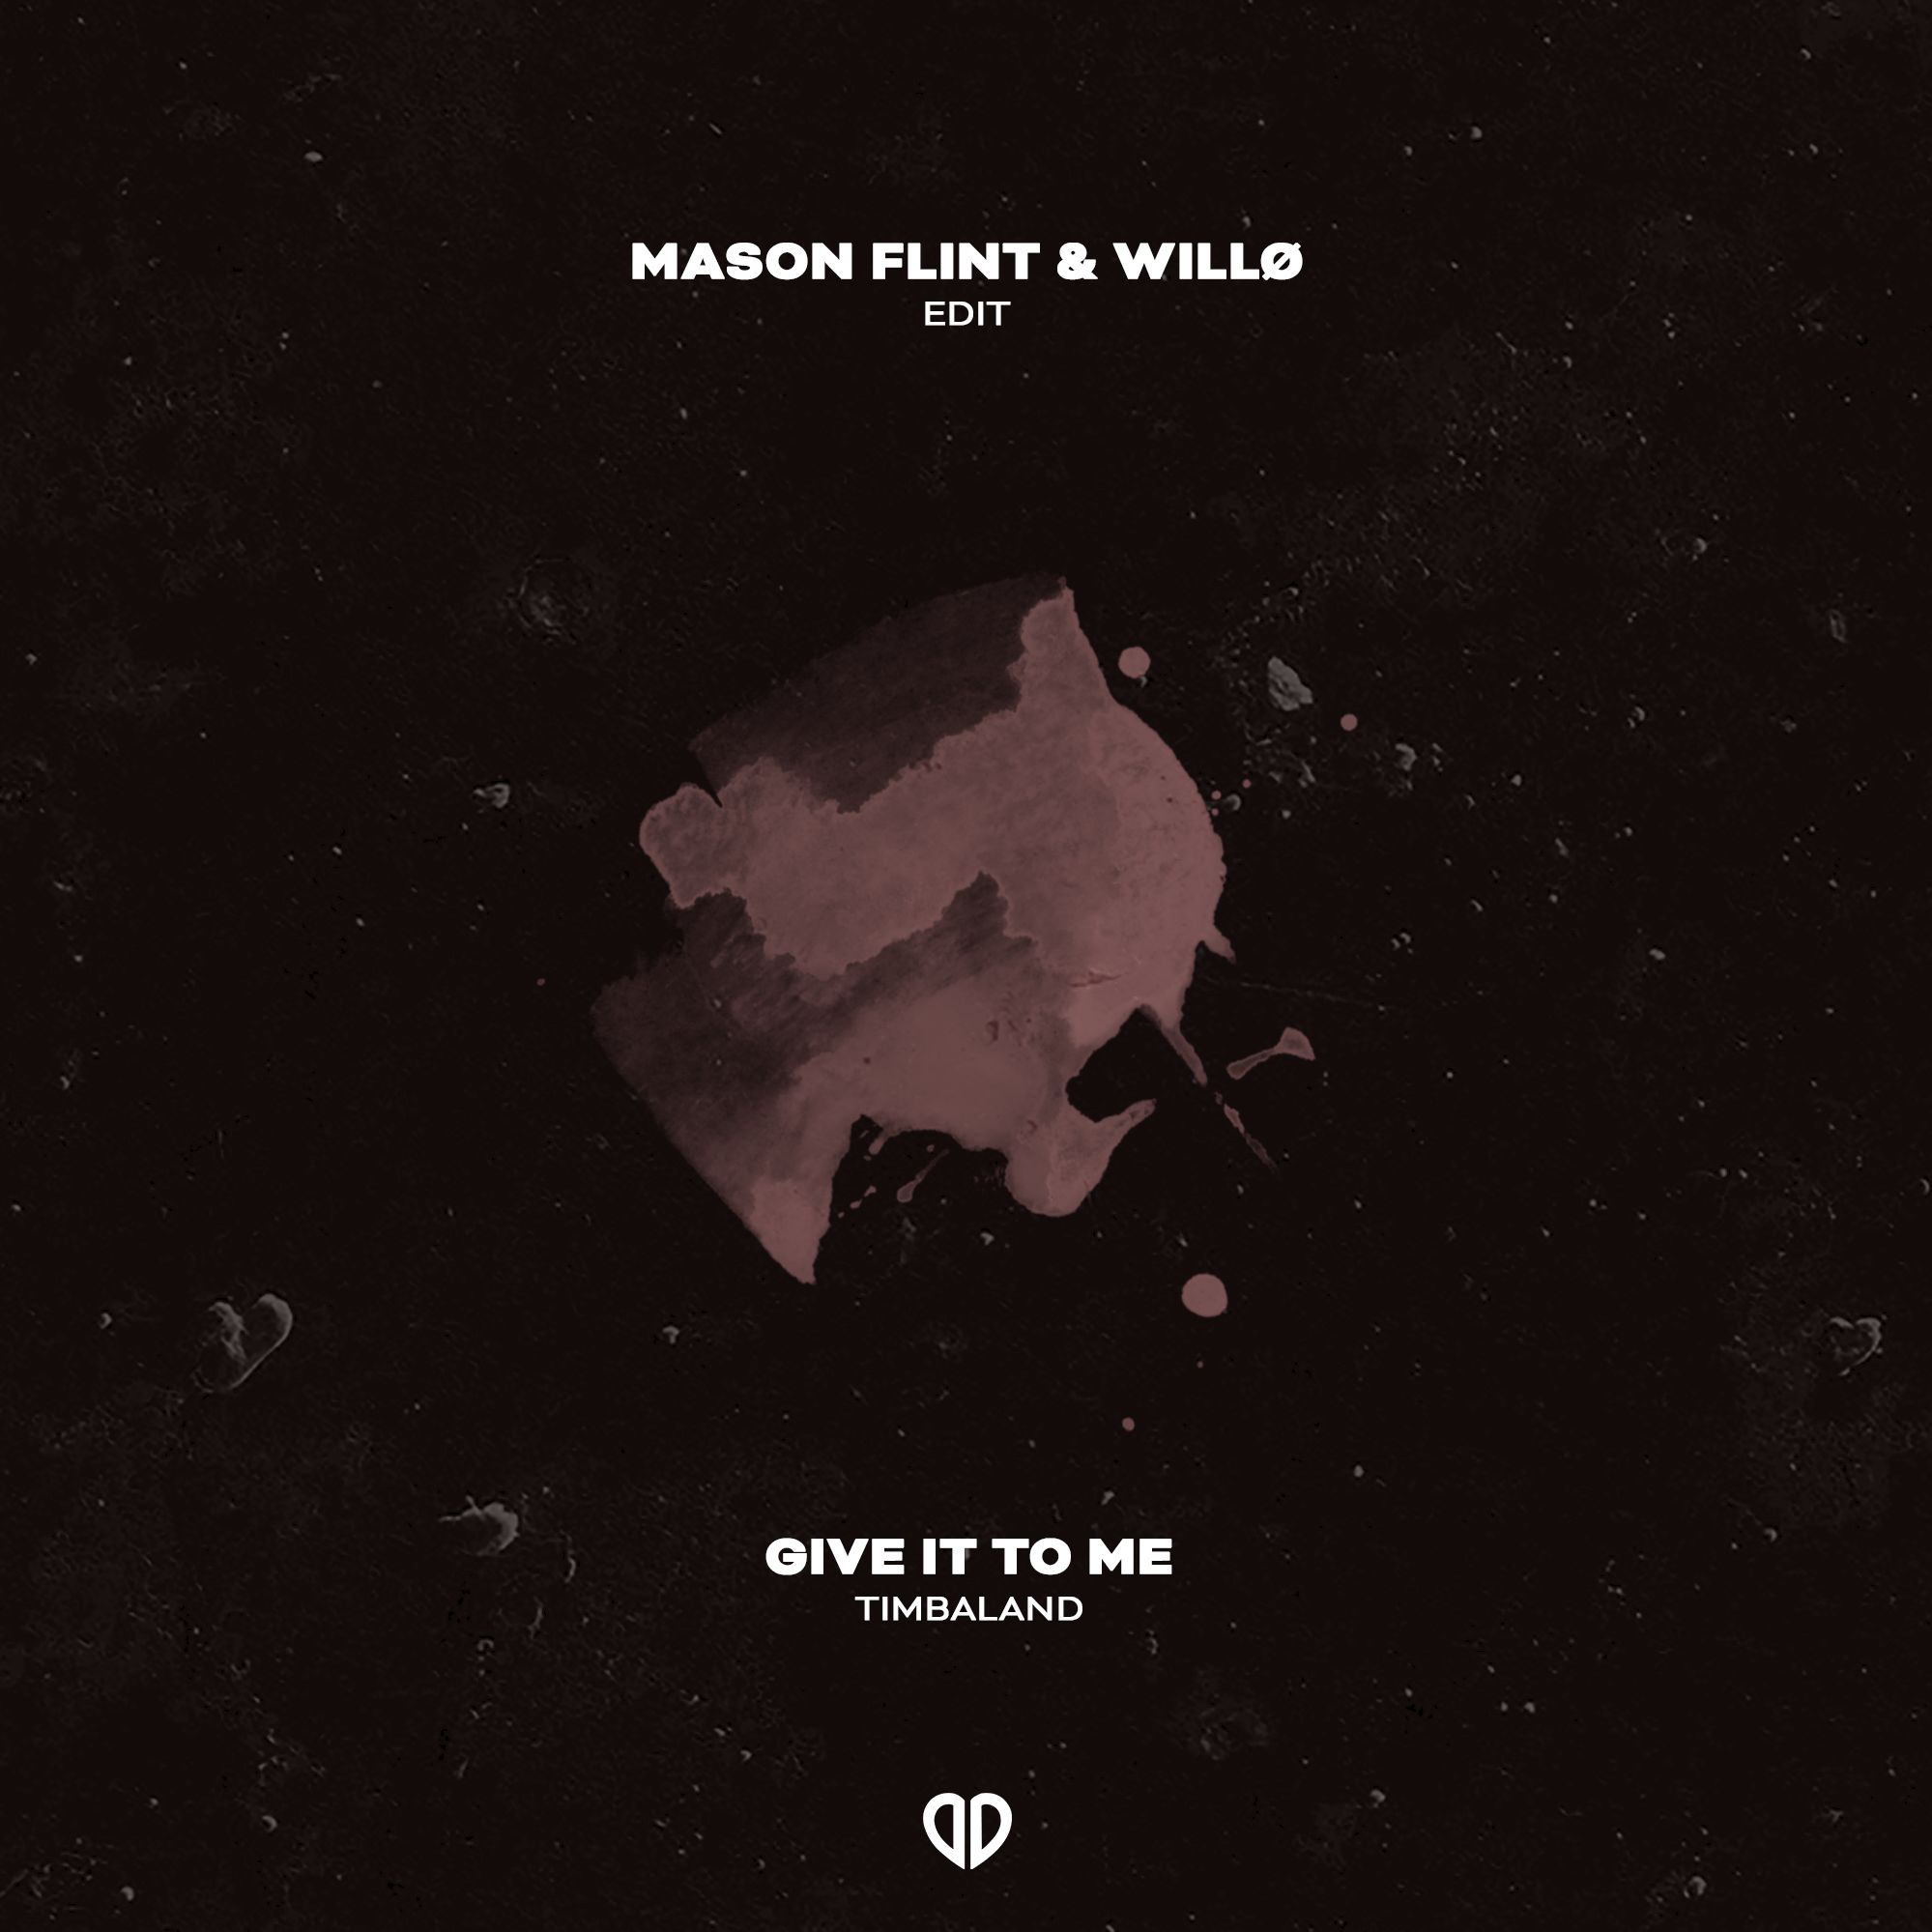 Soo dejiso Timbaland - Give It To Me (Mason Flint & Willo Edit) [DropUnited Exclusive]